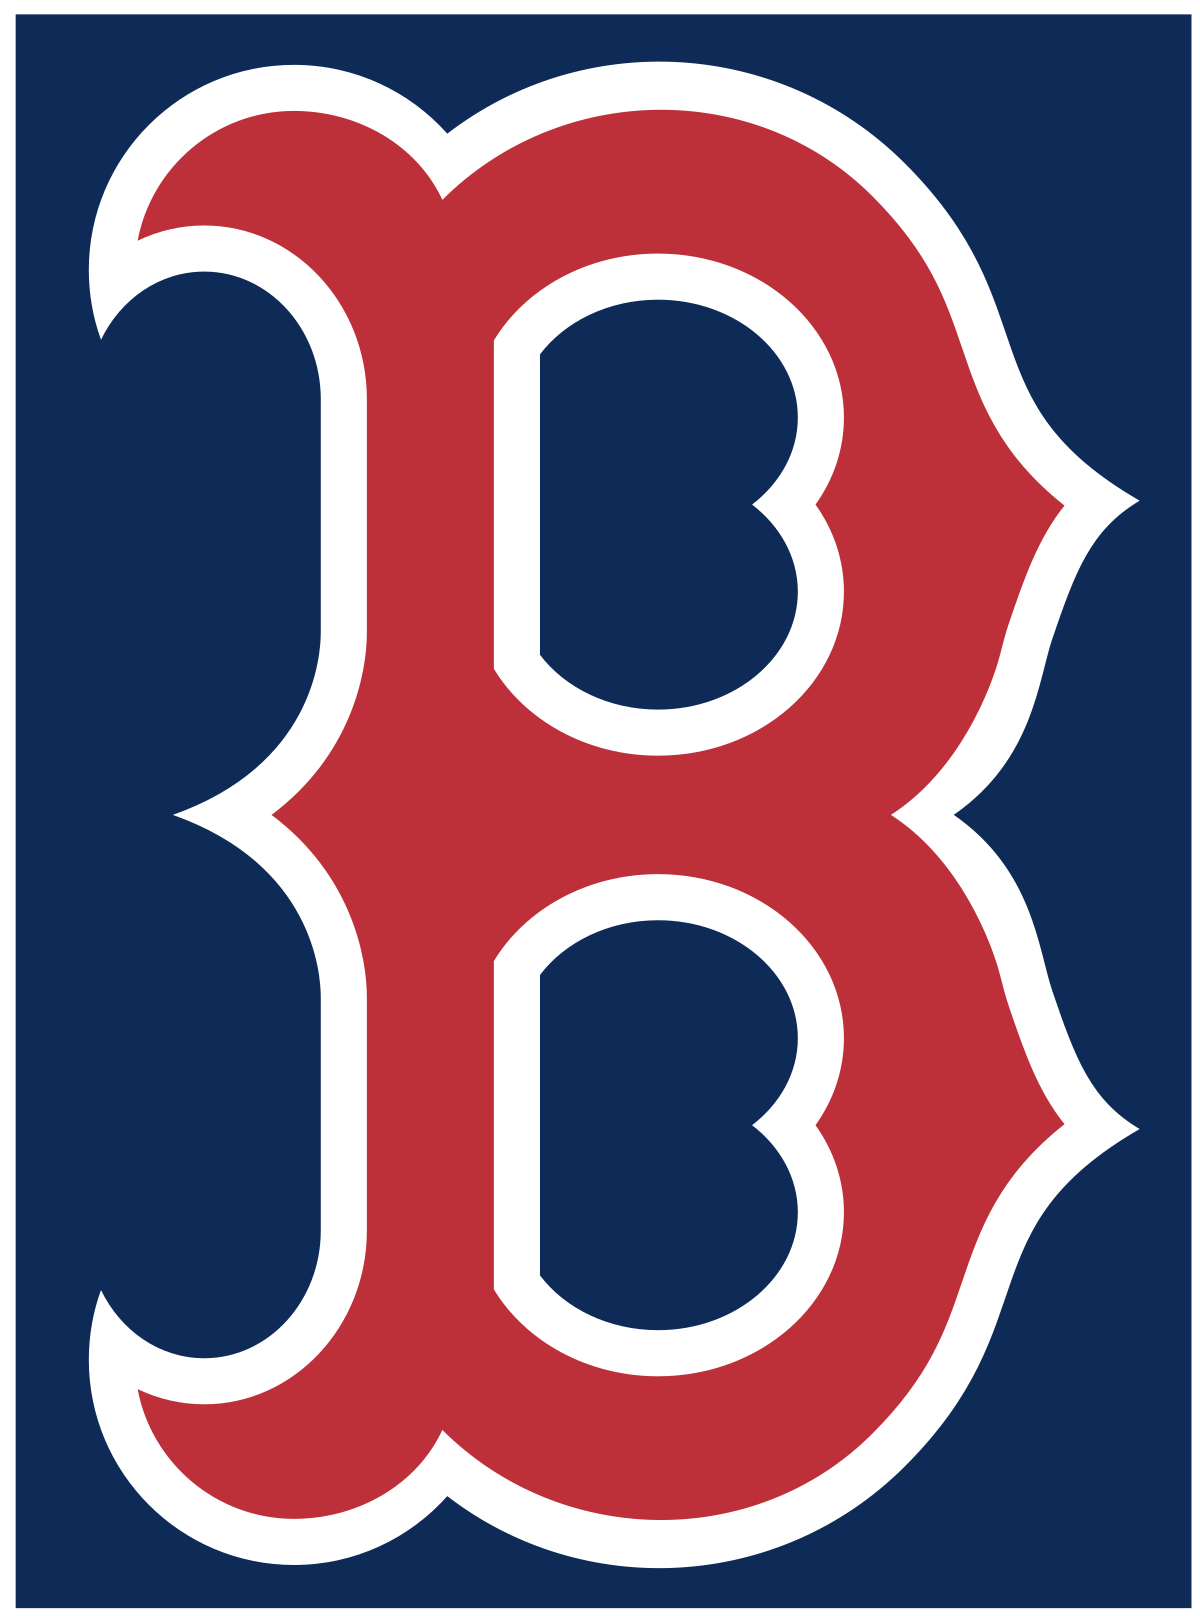 Boston Red Sox Logo - 2018 Boston Red Sox season